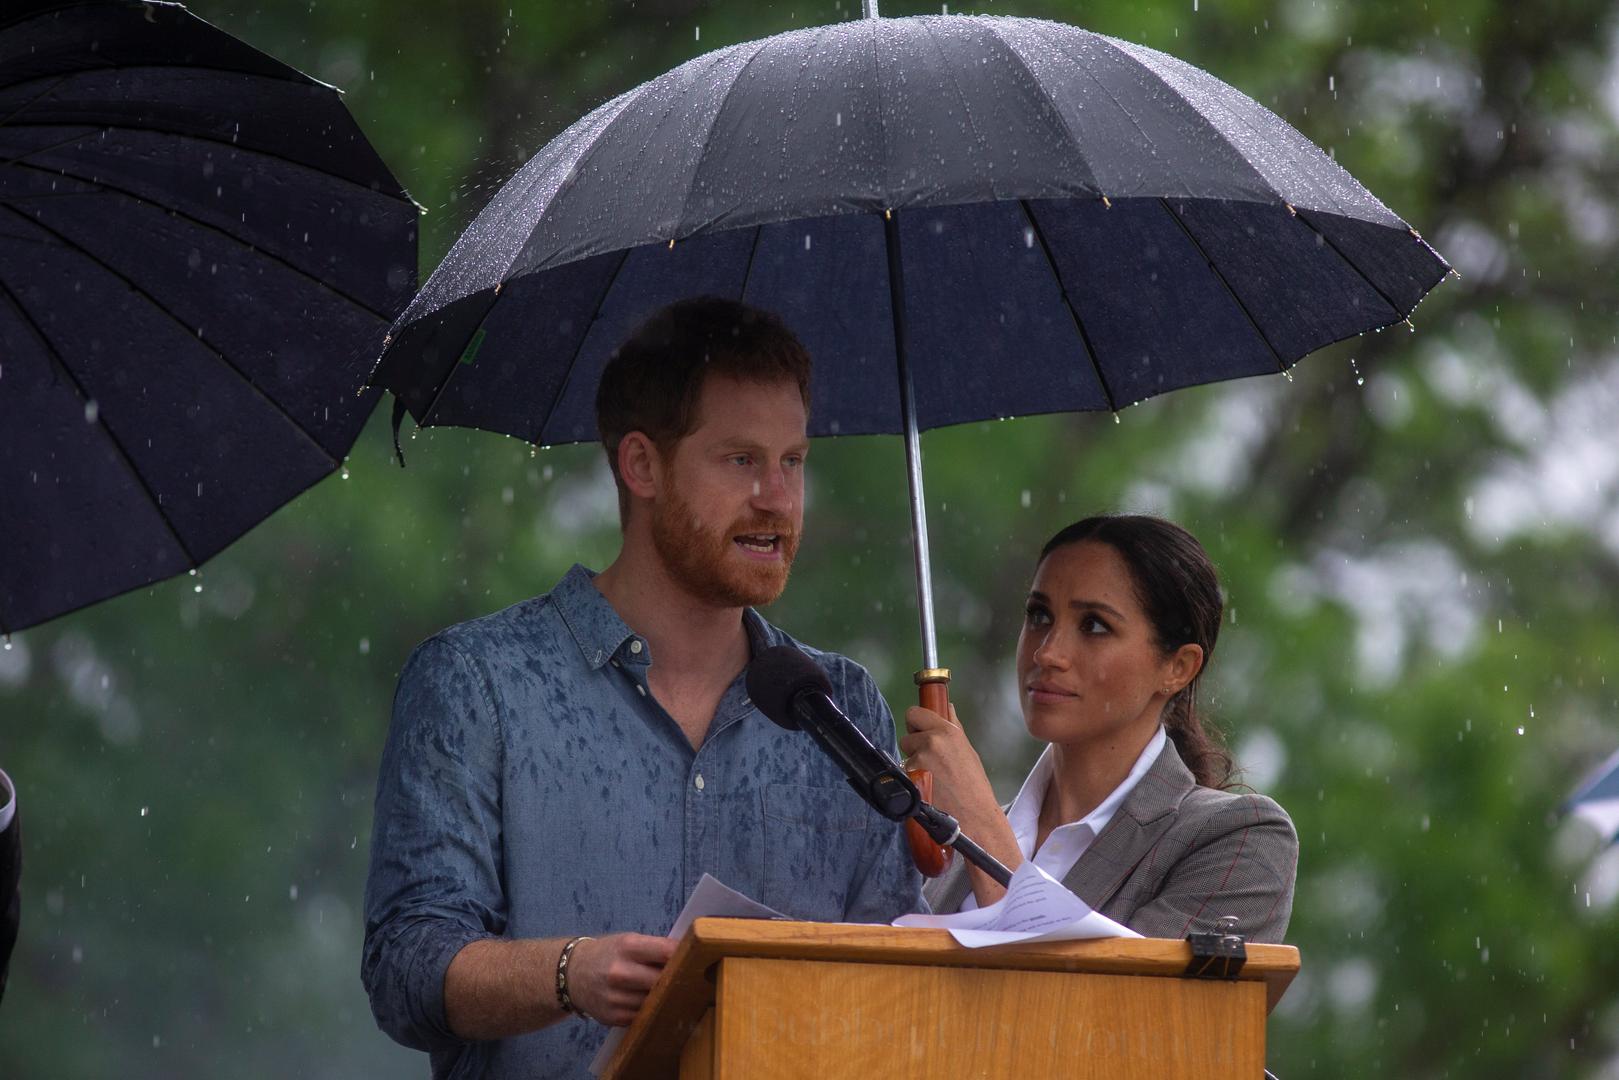 Kada su  ga pitali trebali mi kišobran, odgovorio je kako će se za to pobrinuti njegova supruga. I tako je Meghan držala Harryju kišobran i zaljubljeno ga gledala dok je on držao govor. 